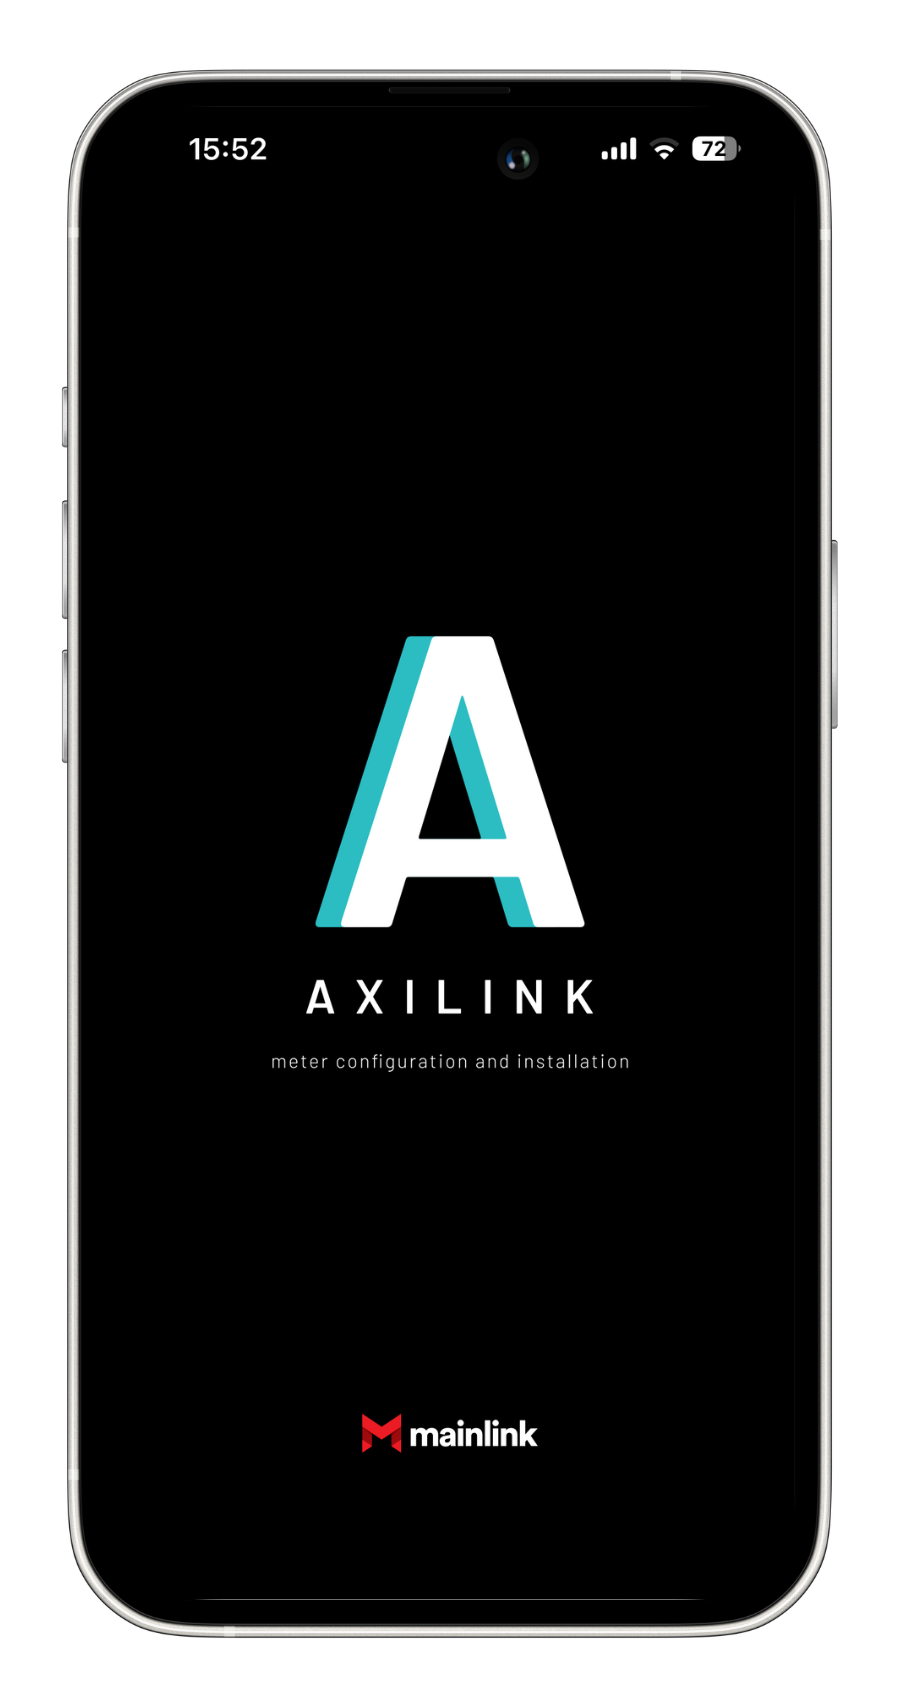 Axilink mobile app homepage